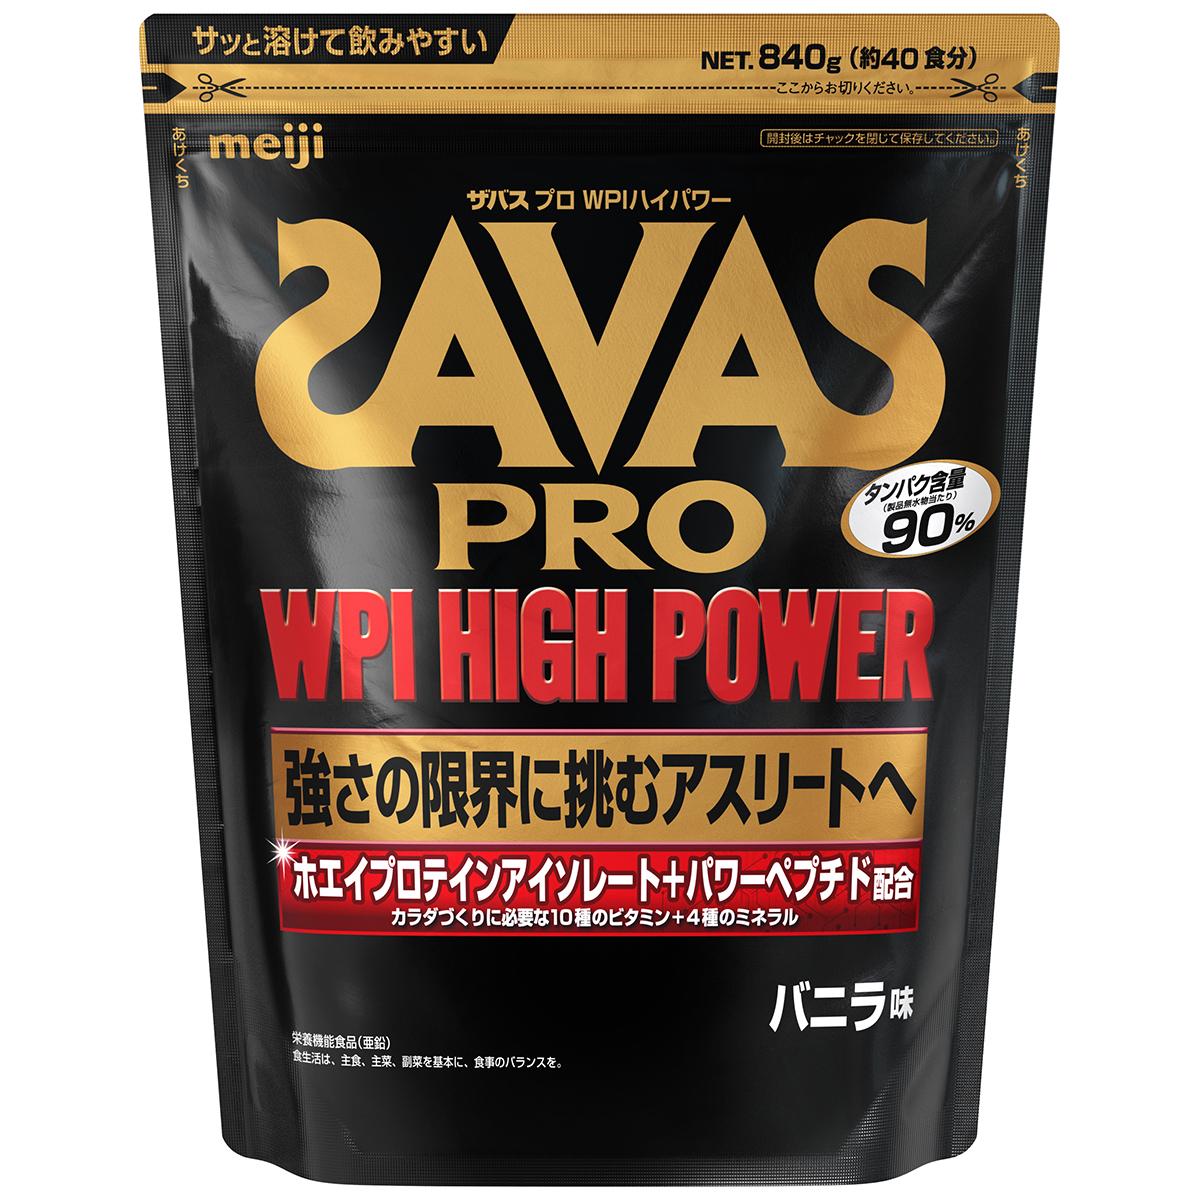 SAVAS PRO WPI HIGH POWER | Informed Choice